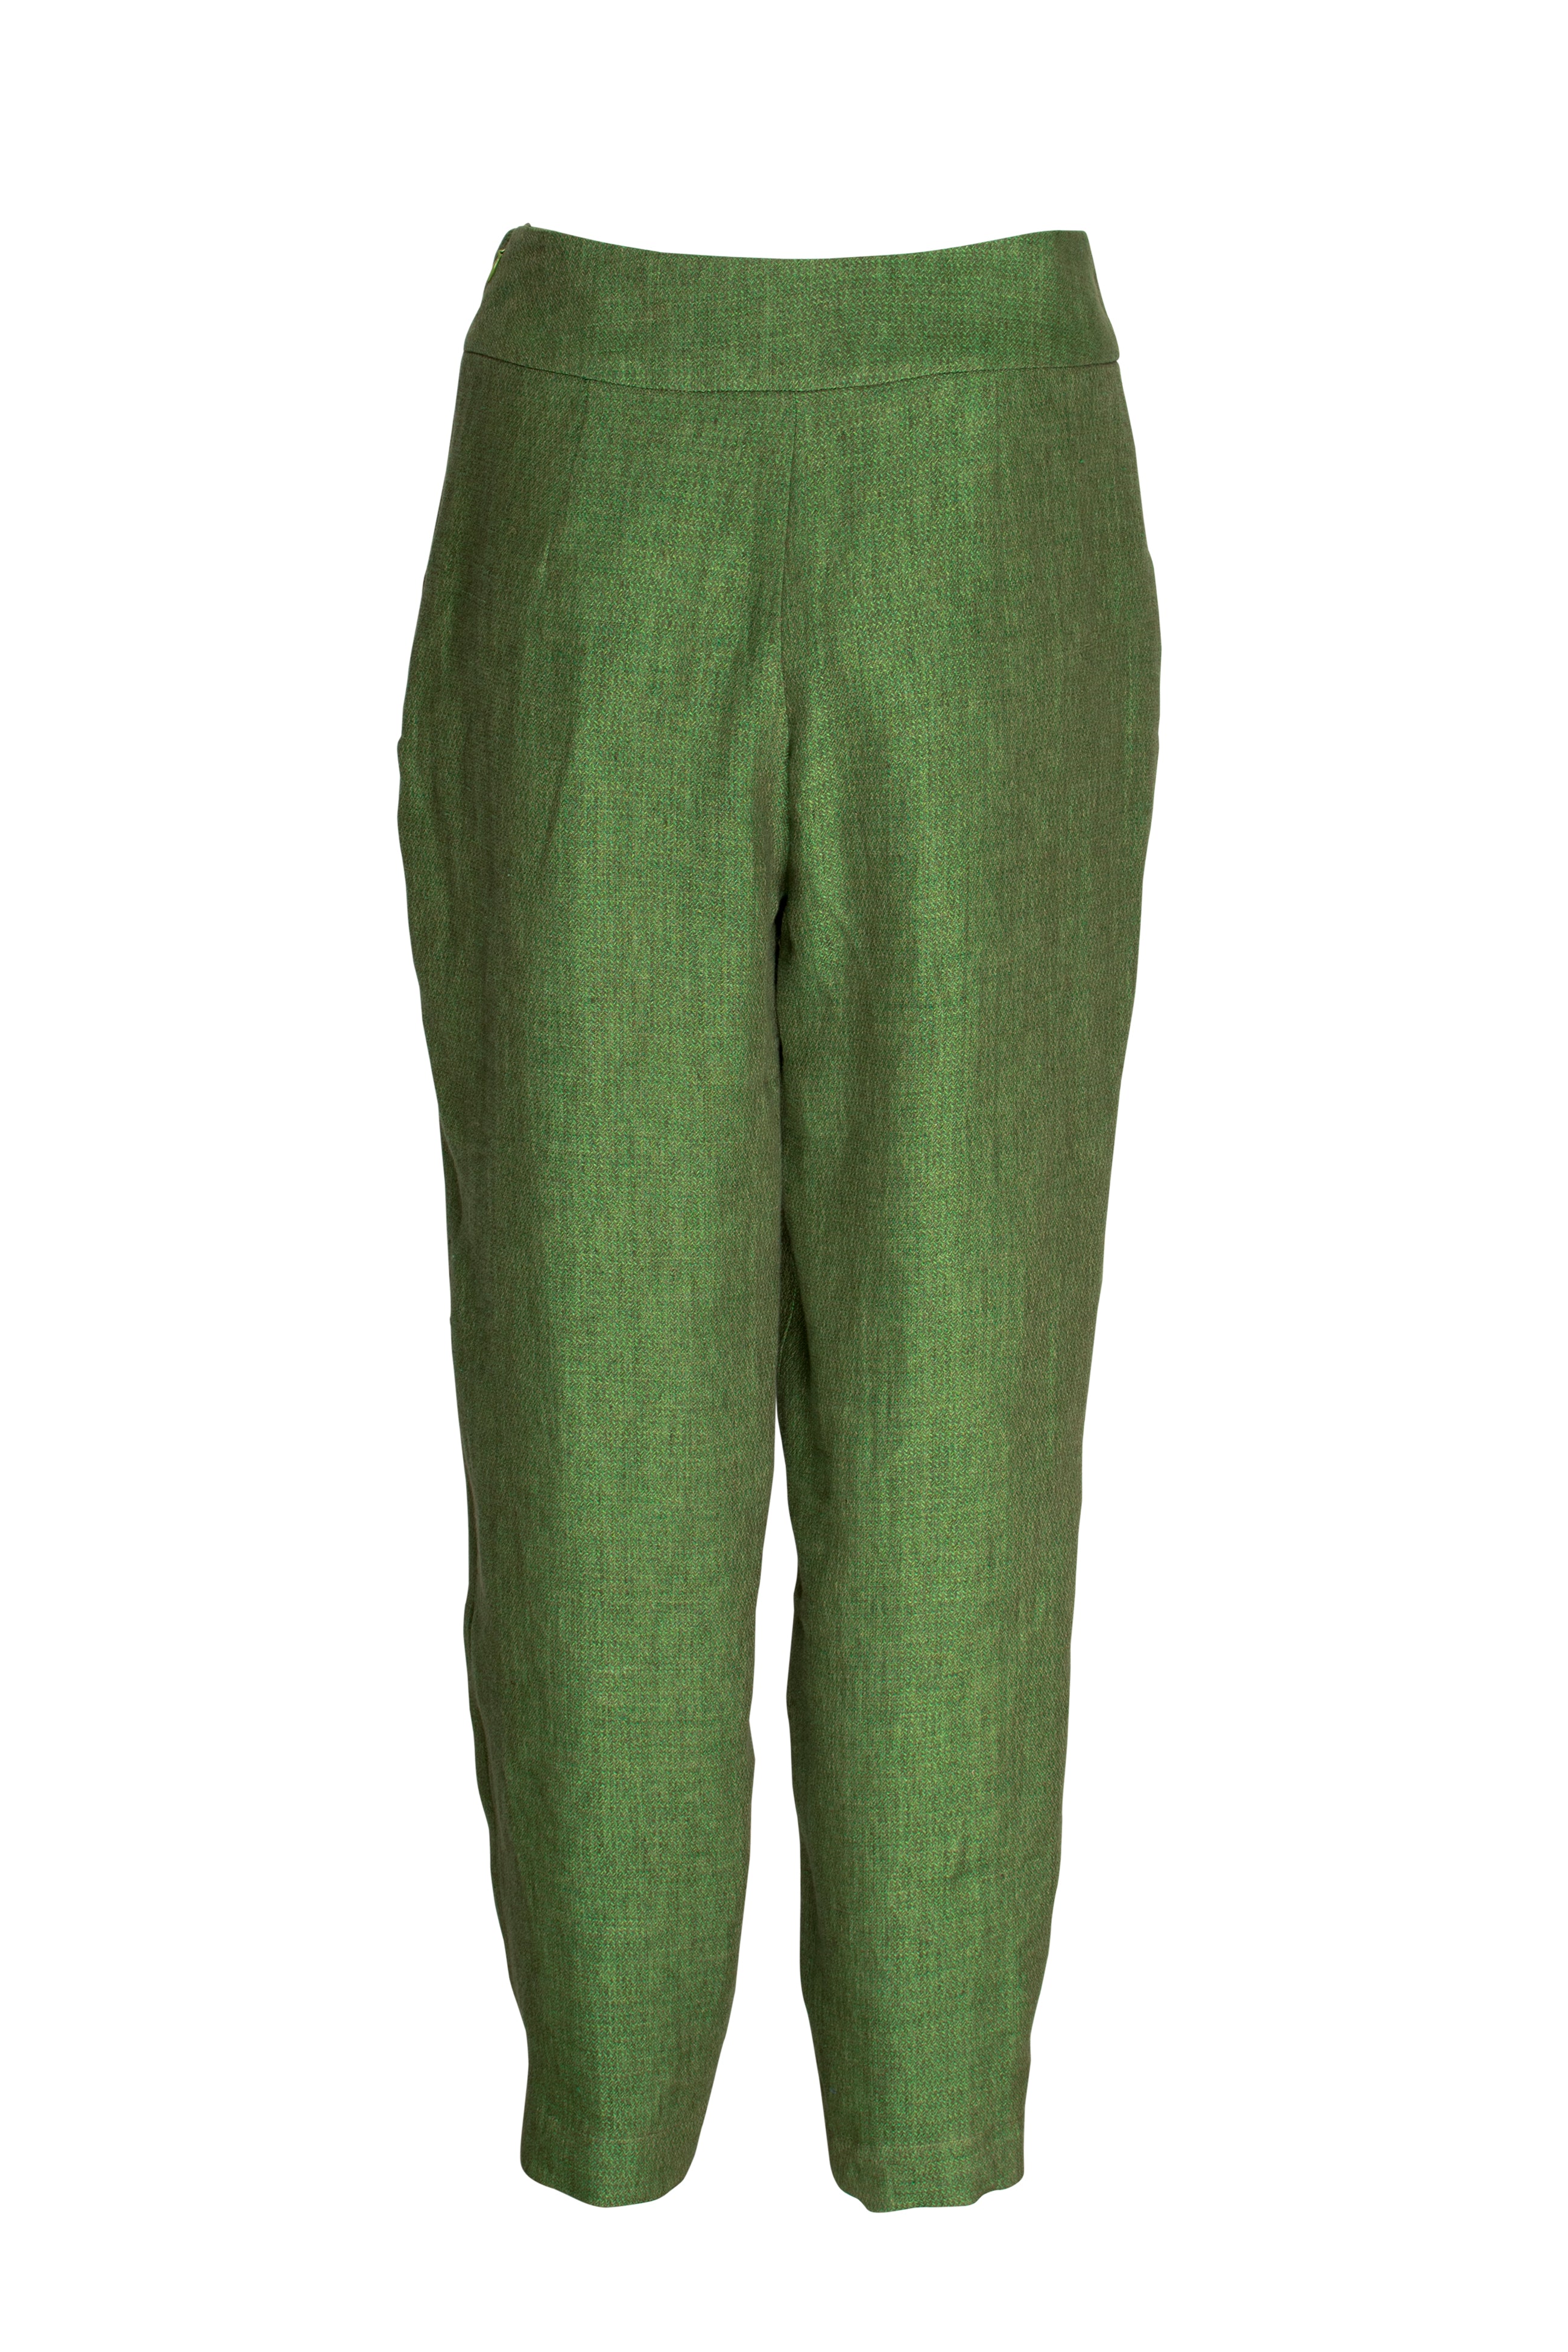 Yoke Pleat Pant - Grass Linen 7825